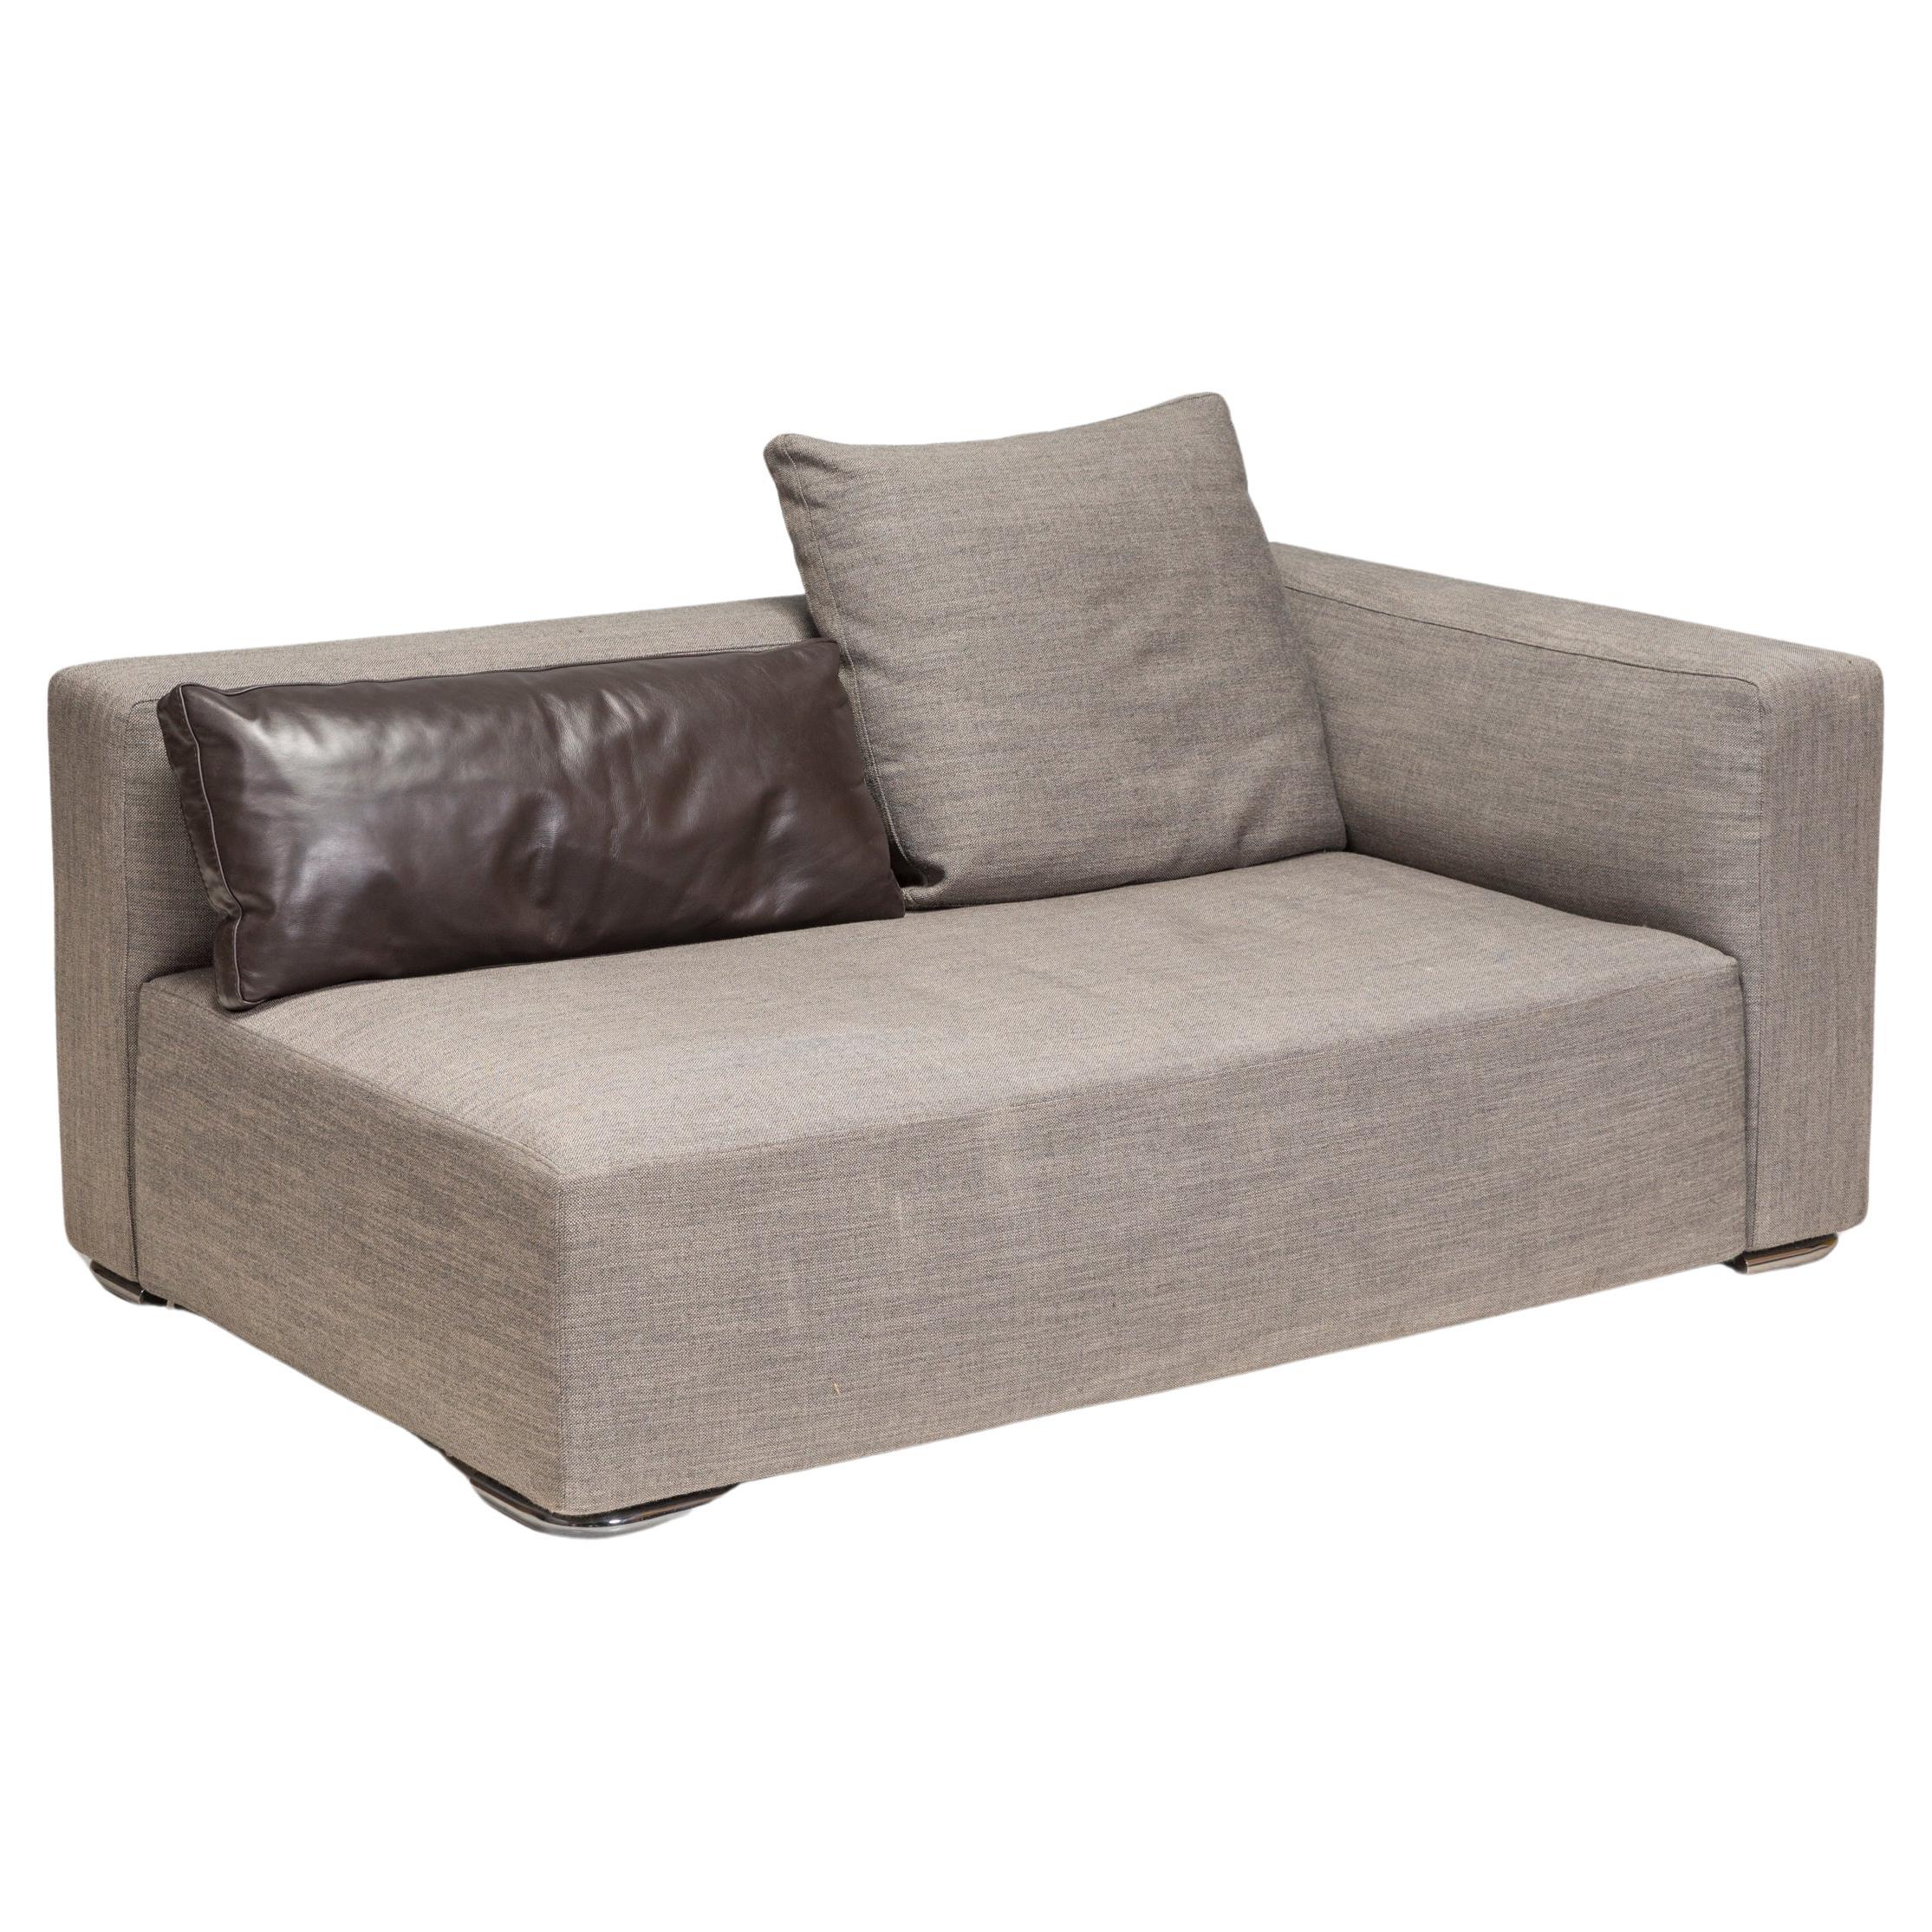 Minotti By Rodolfo Dordoni Donovan Grey Sofa For Sale